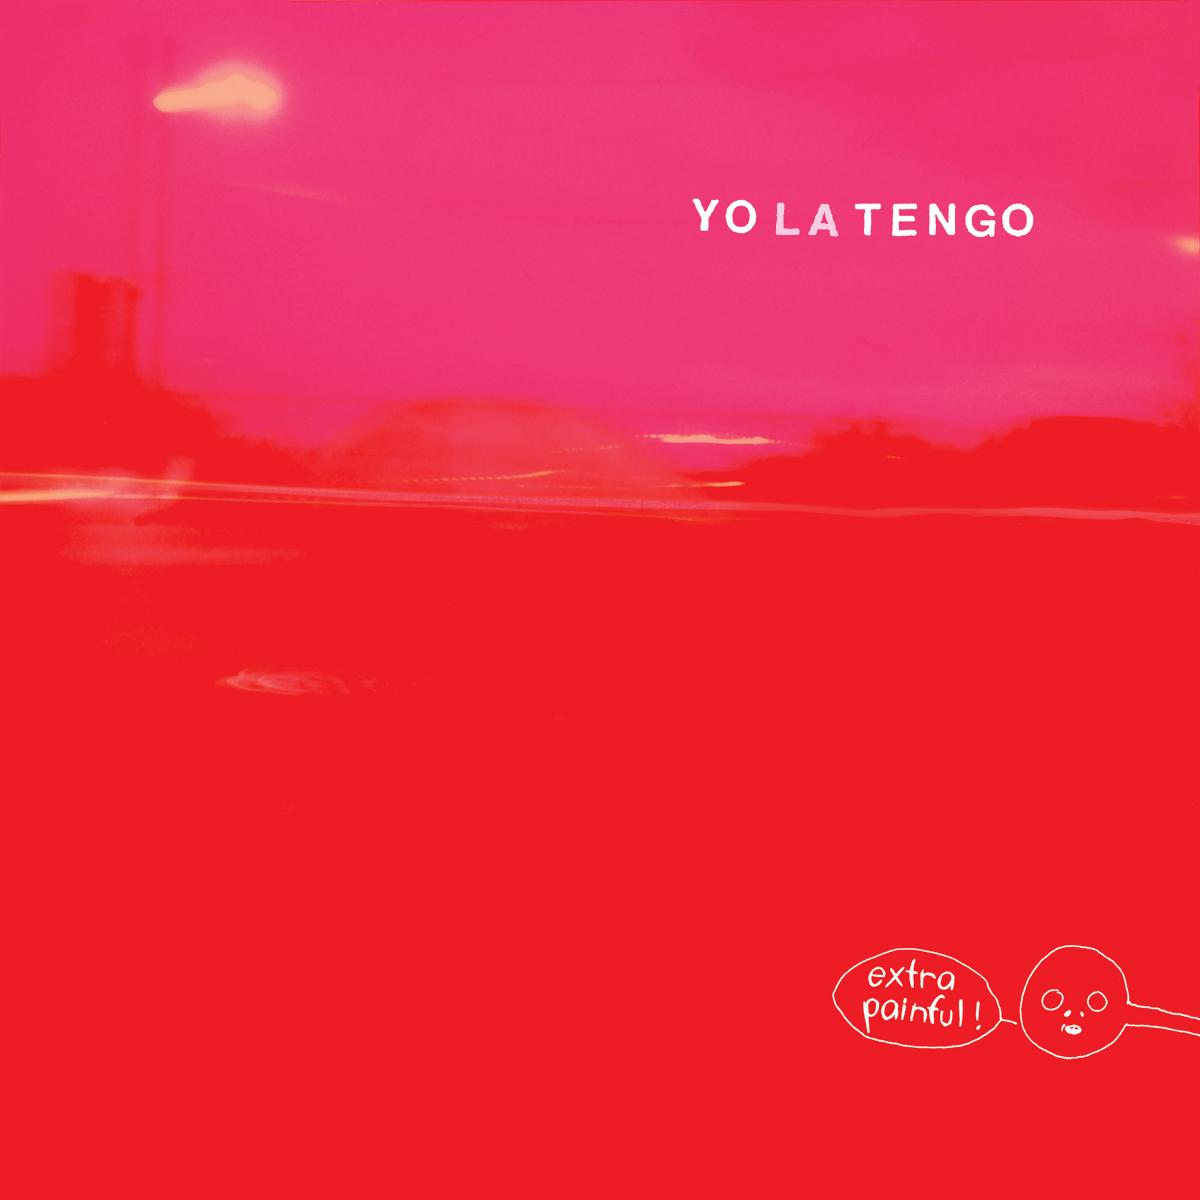 Yo La Tengo - Extra Painful (Bonus 7", Digital Download Code)